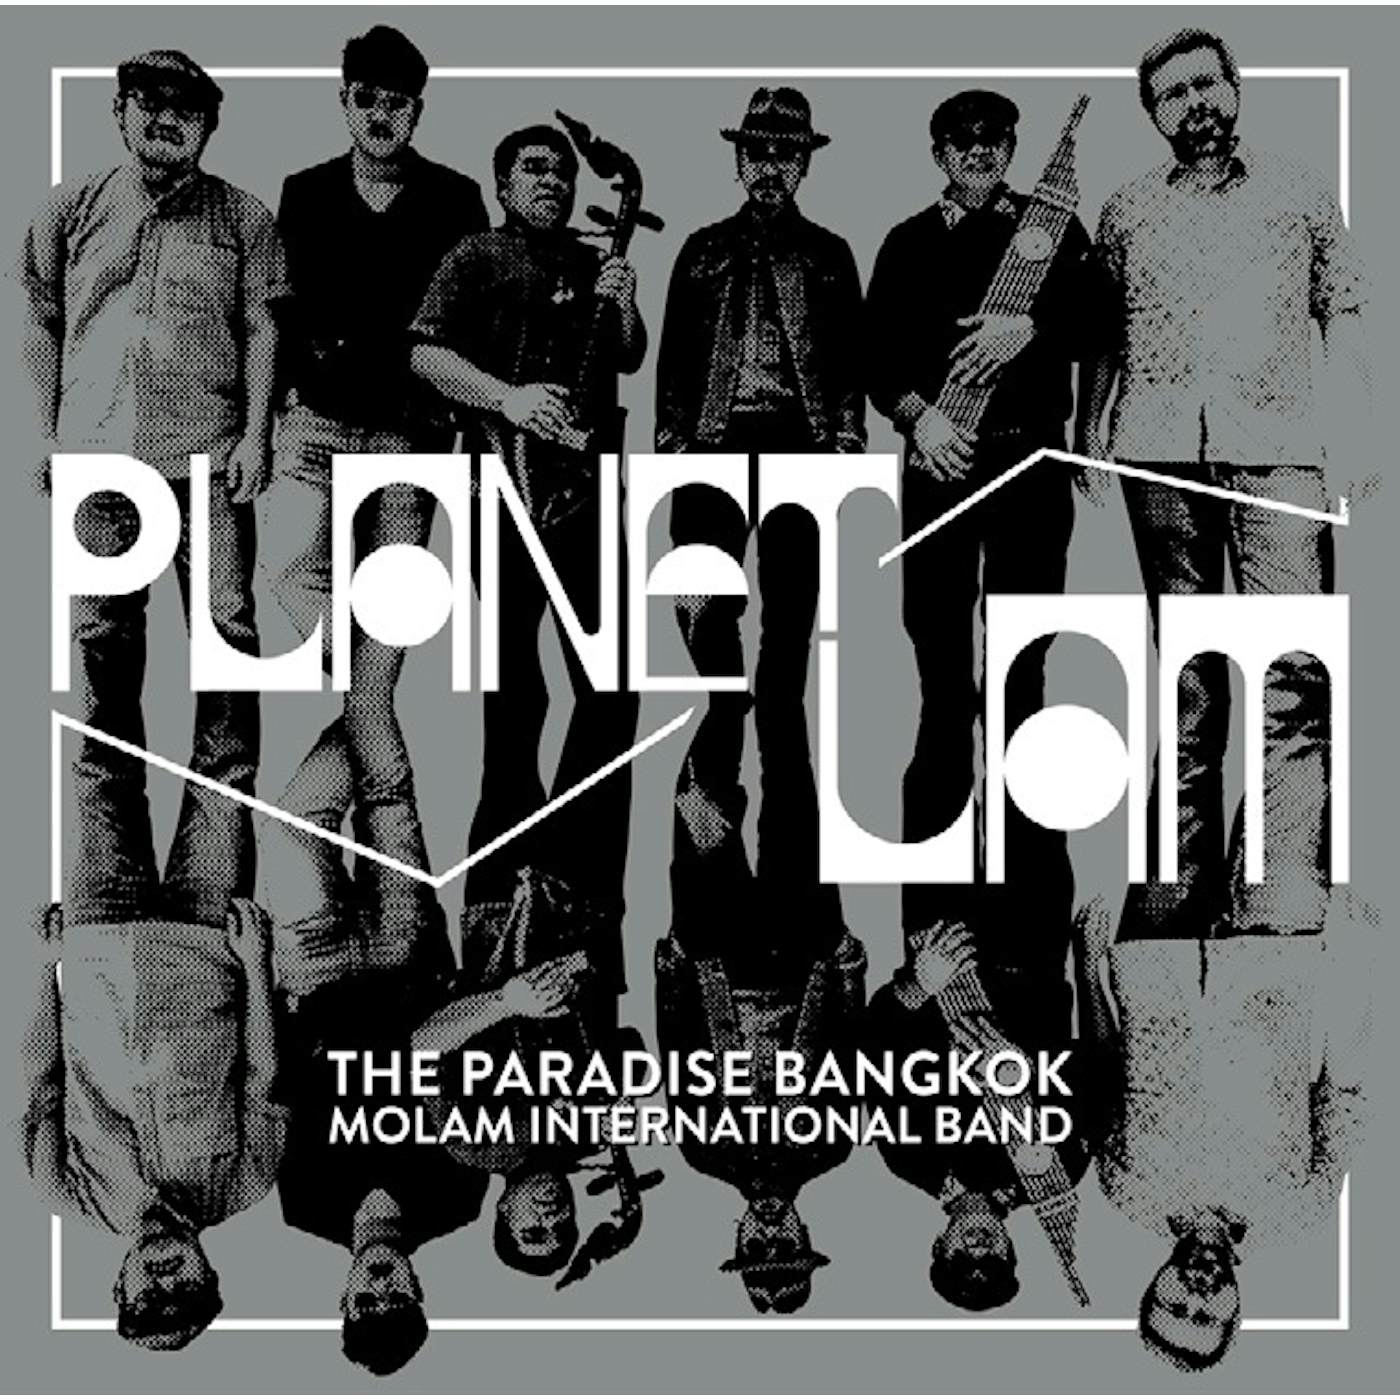 The Paradise Bangkok Molam International Band Planet Lam Vinyl Record